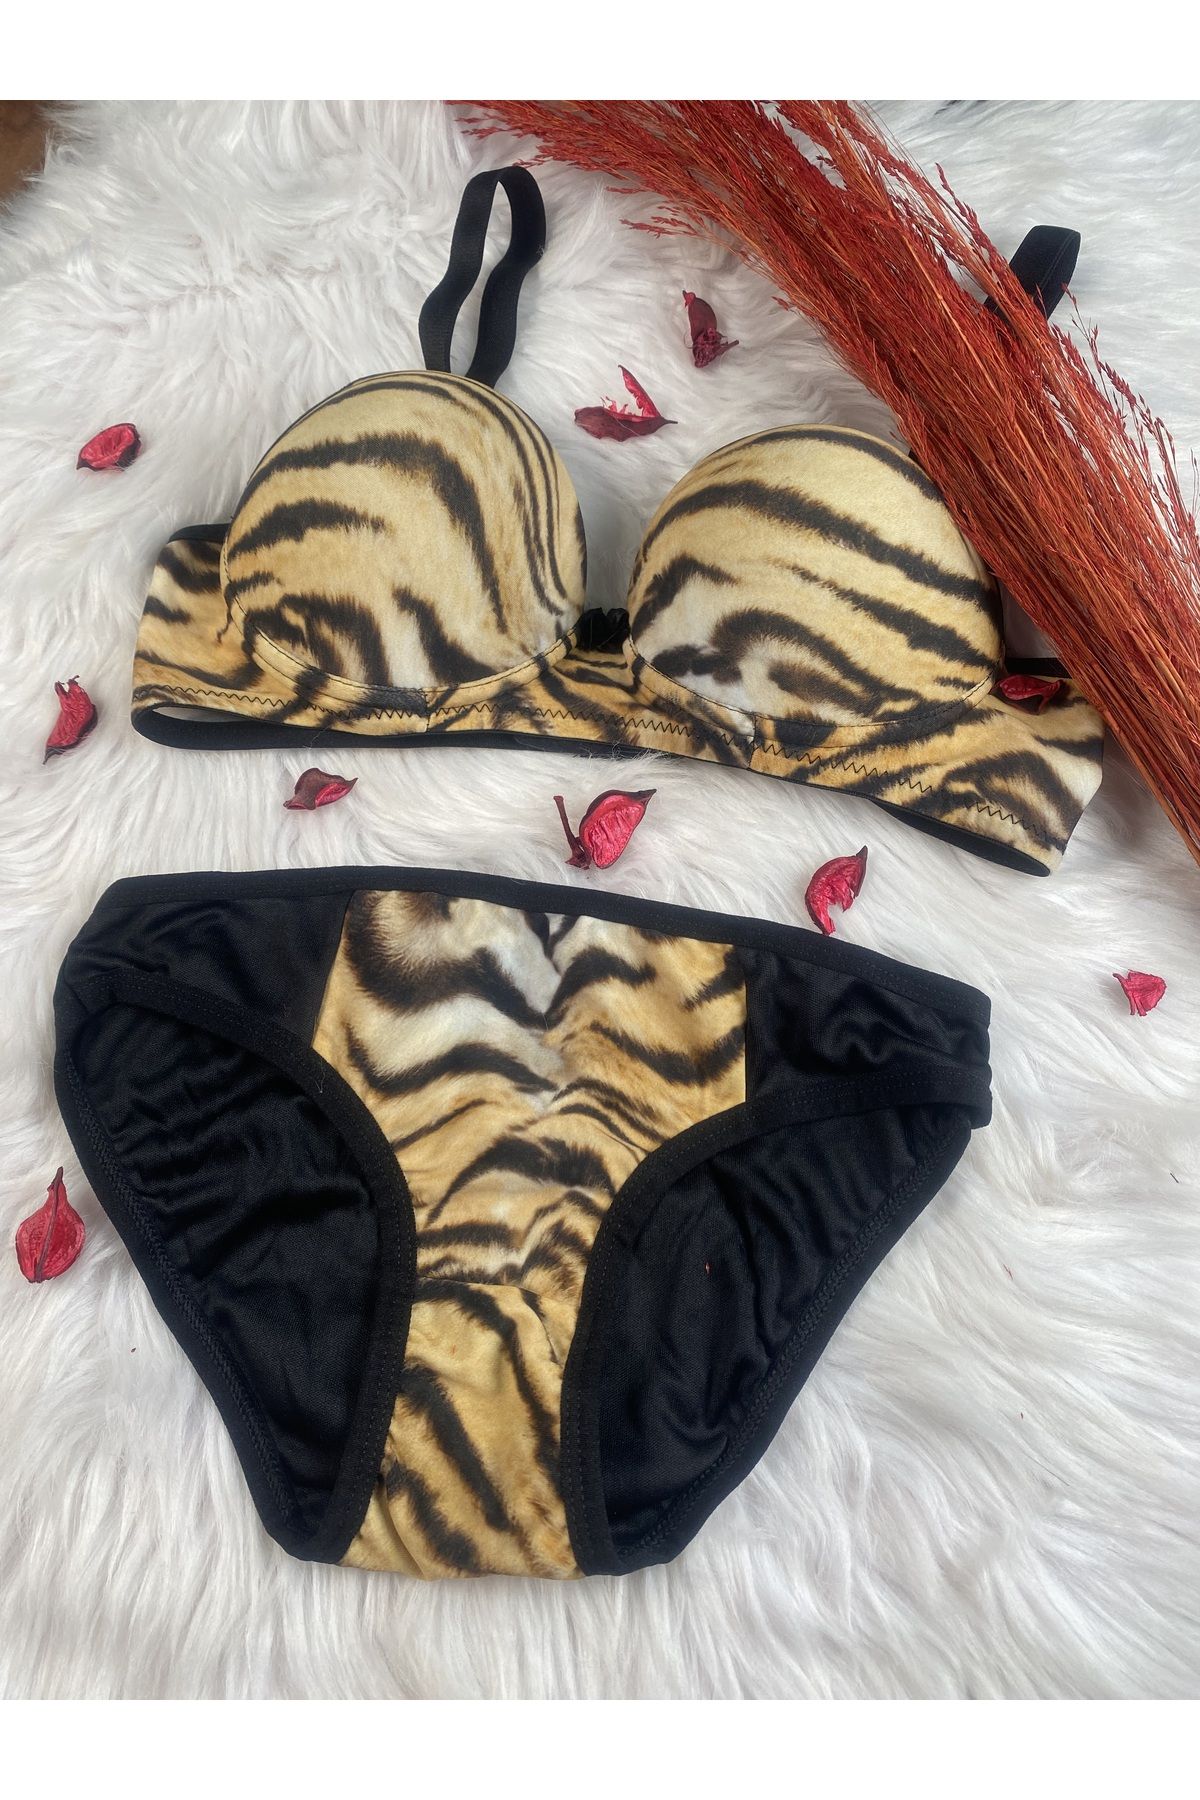 Masal Lingerie Women's Covered Tiger Pattern Padded Stylish Bra